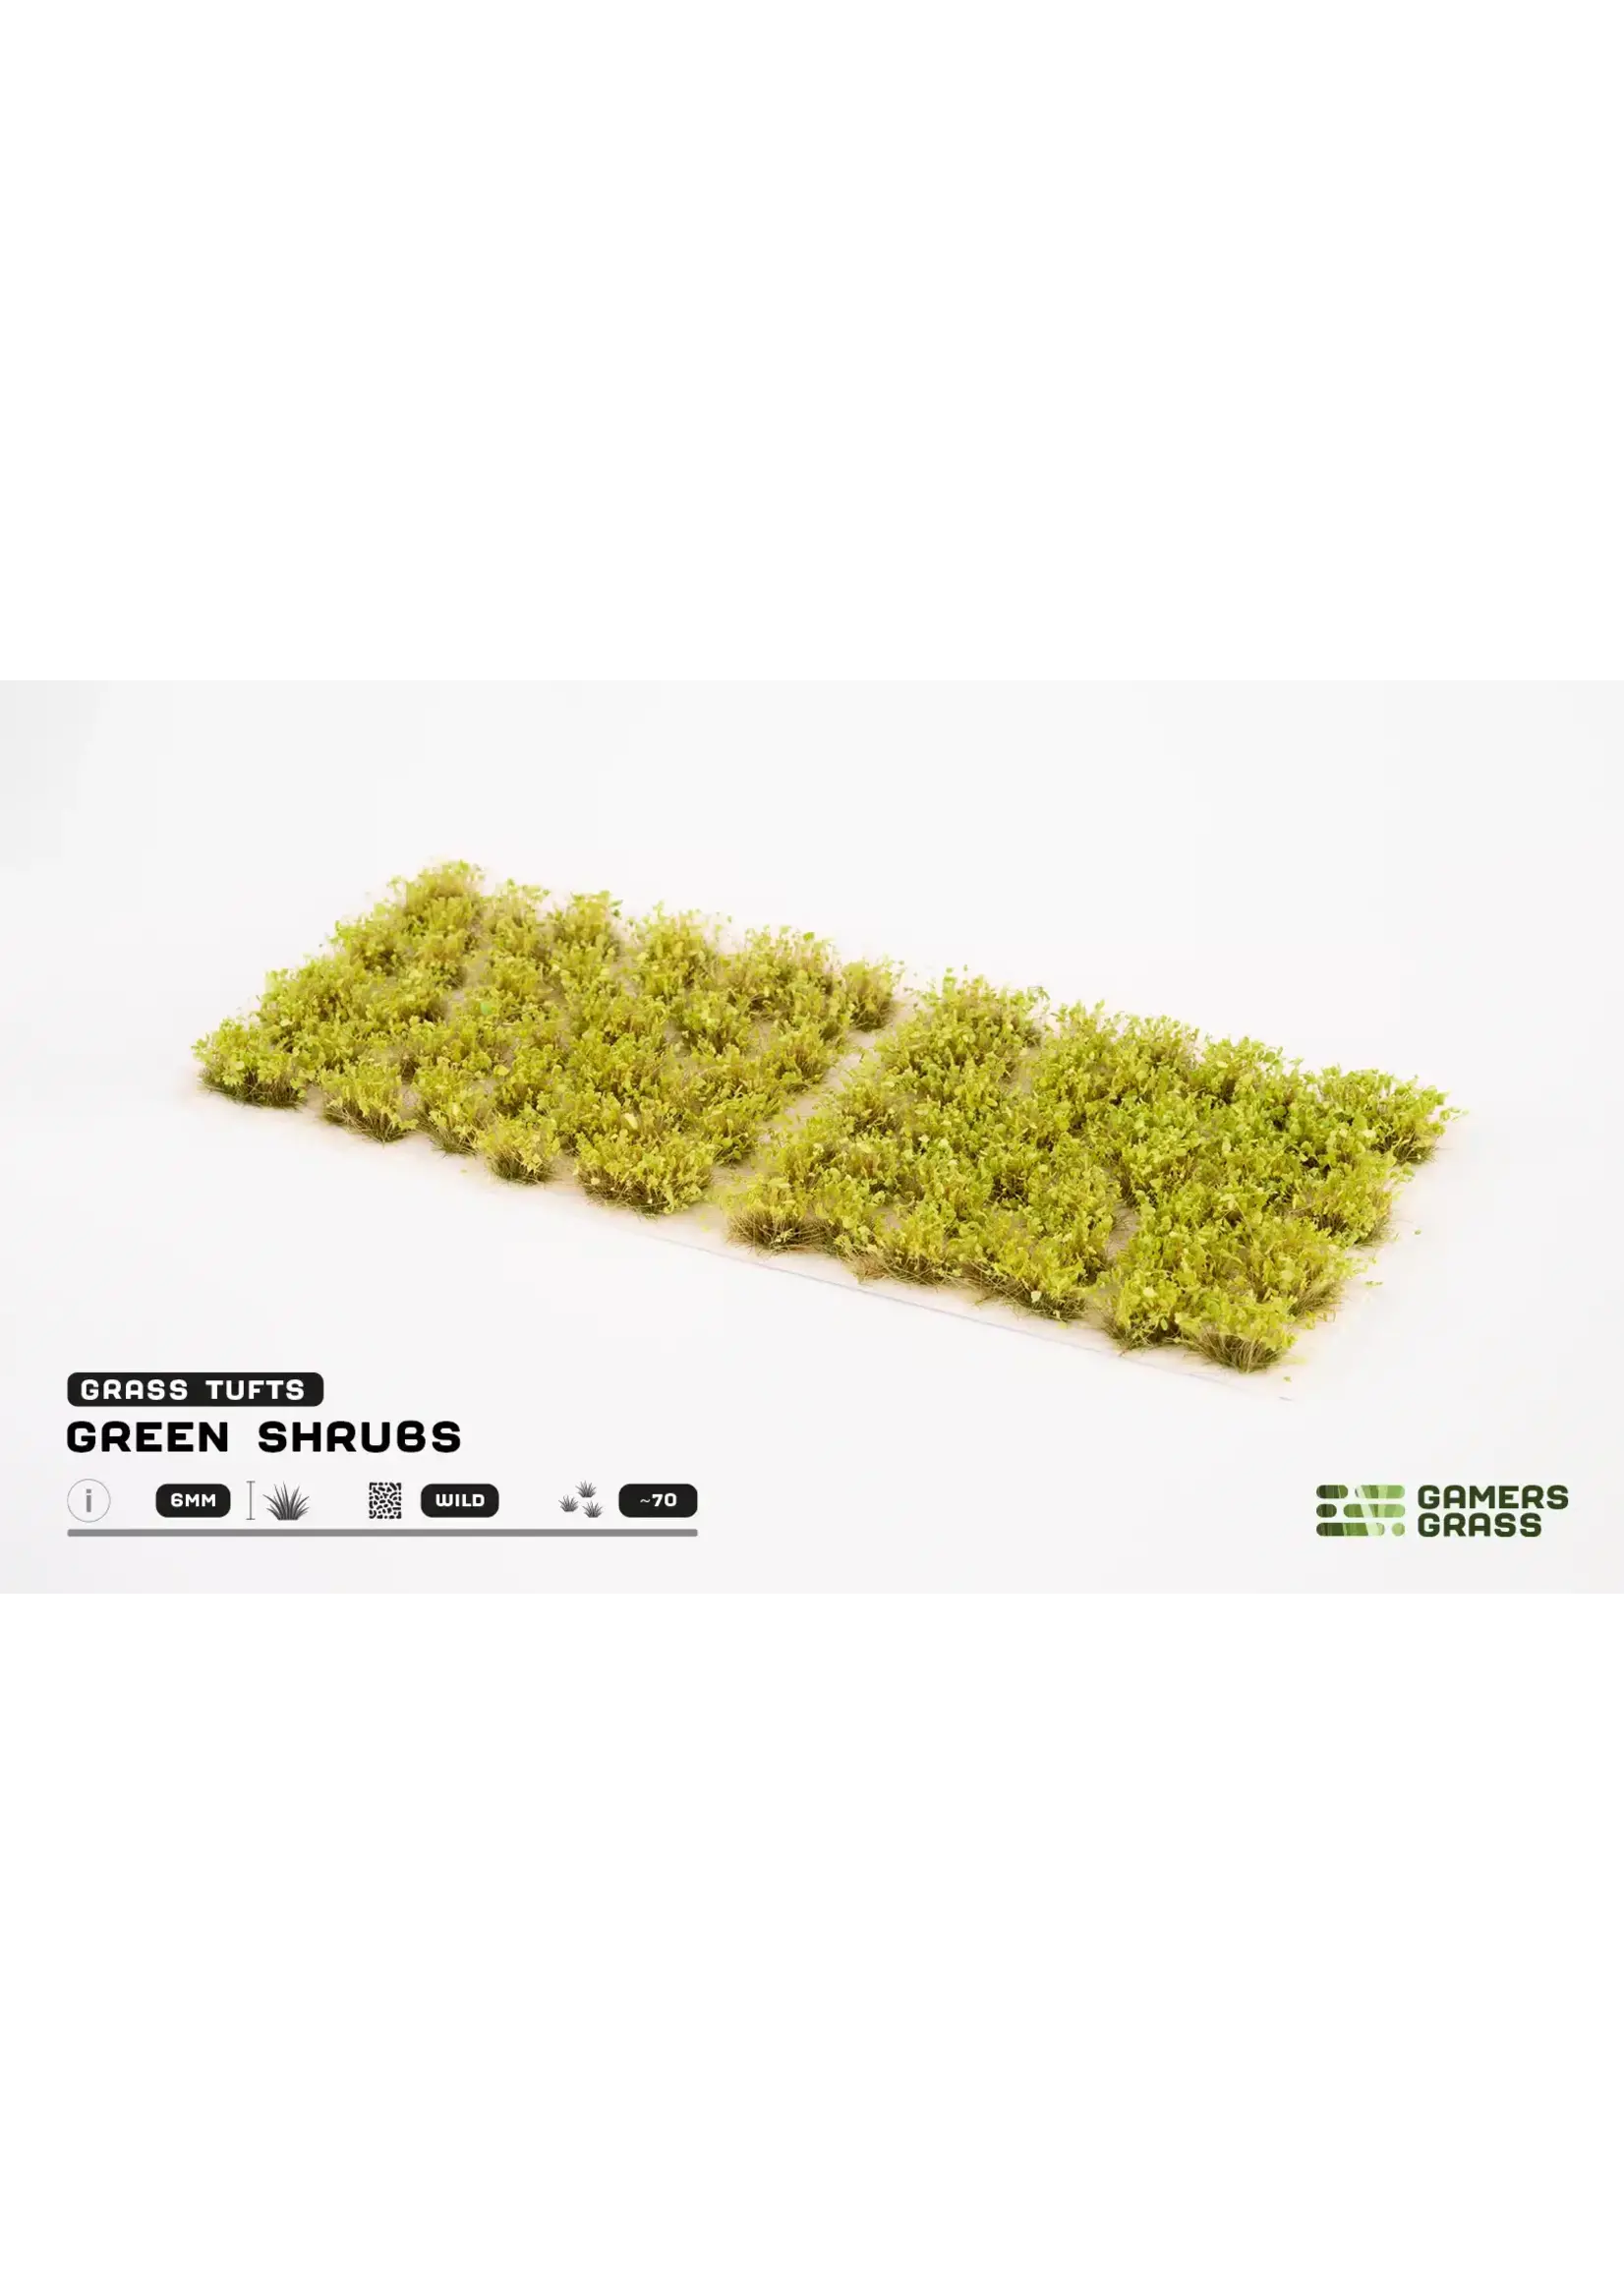 Gamers Grass Green Shrub